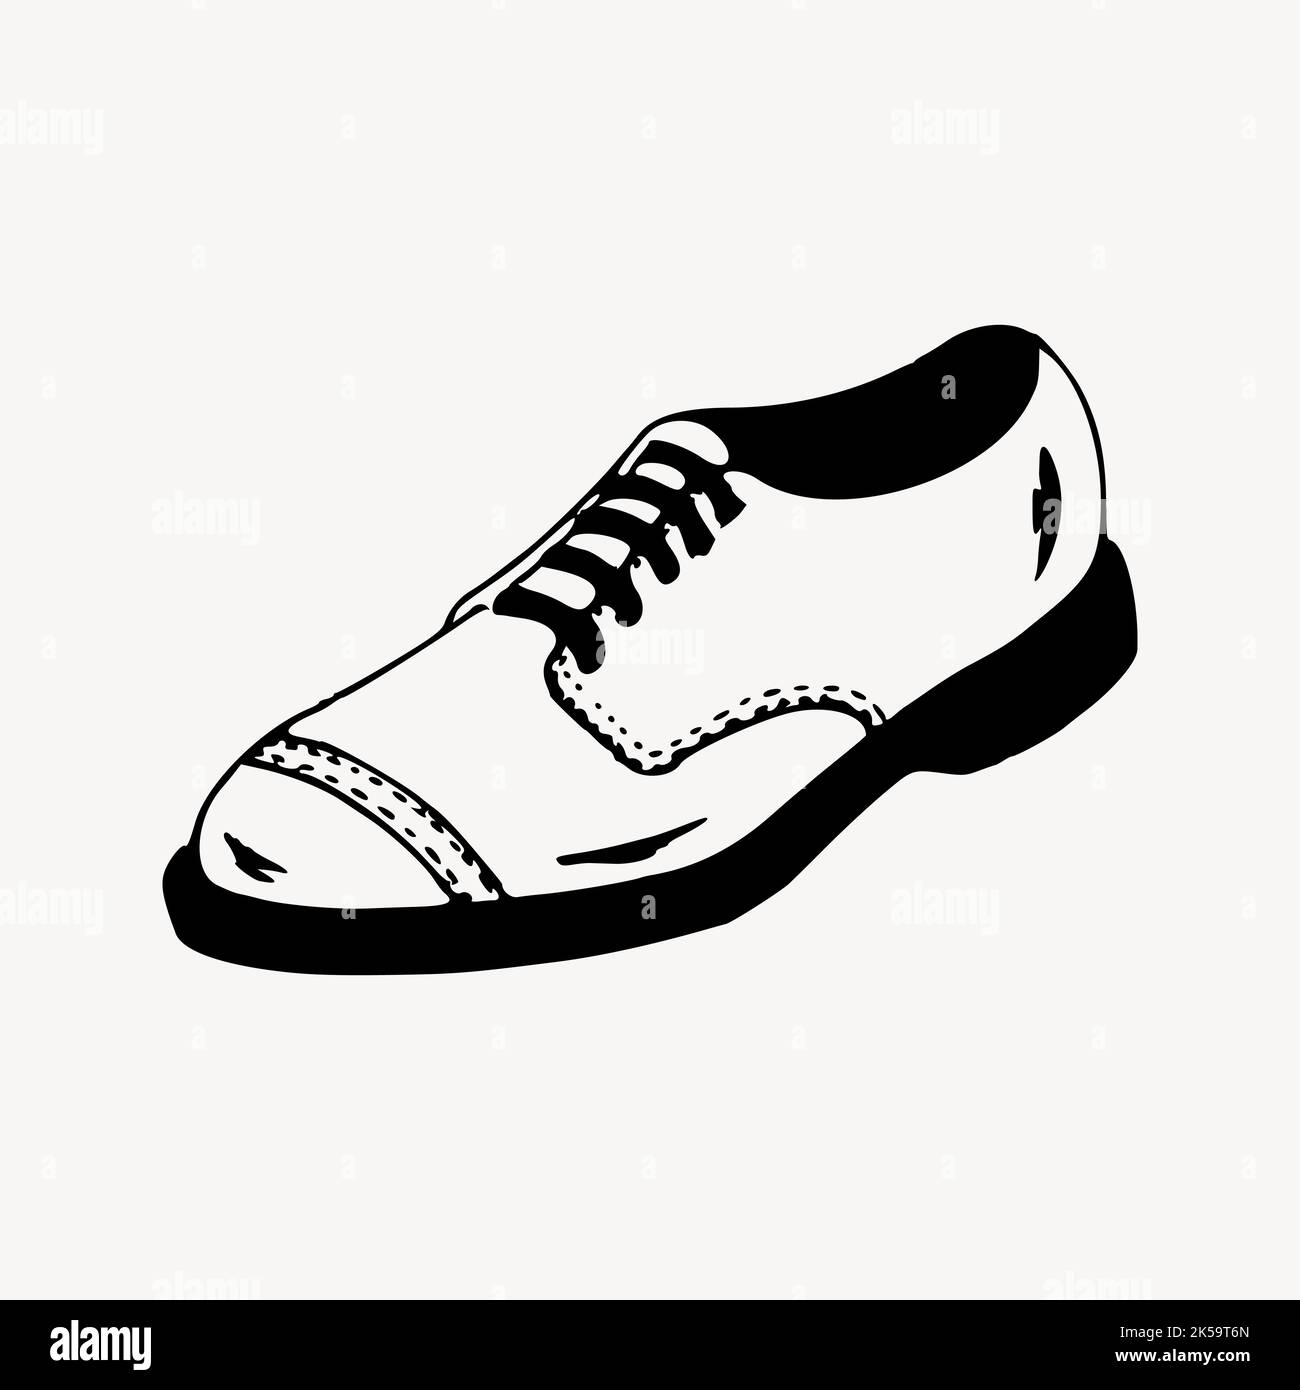 Men's shoe collage element vector Stock Vector Image & Art - Alamy